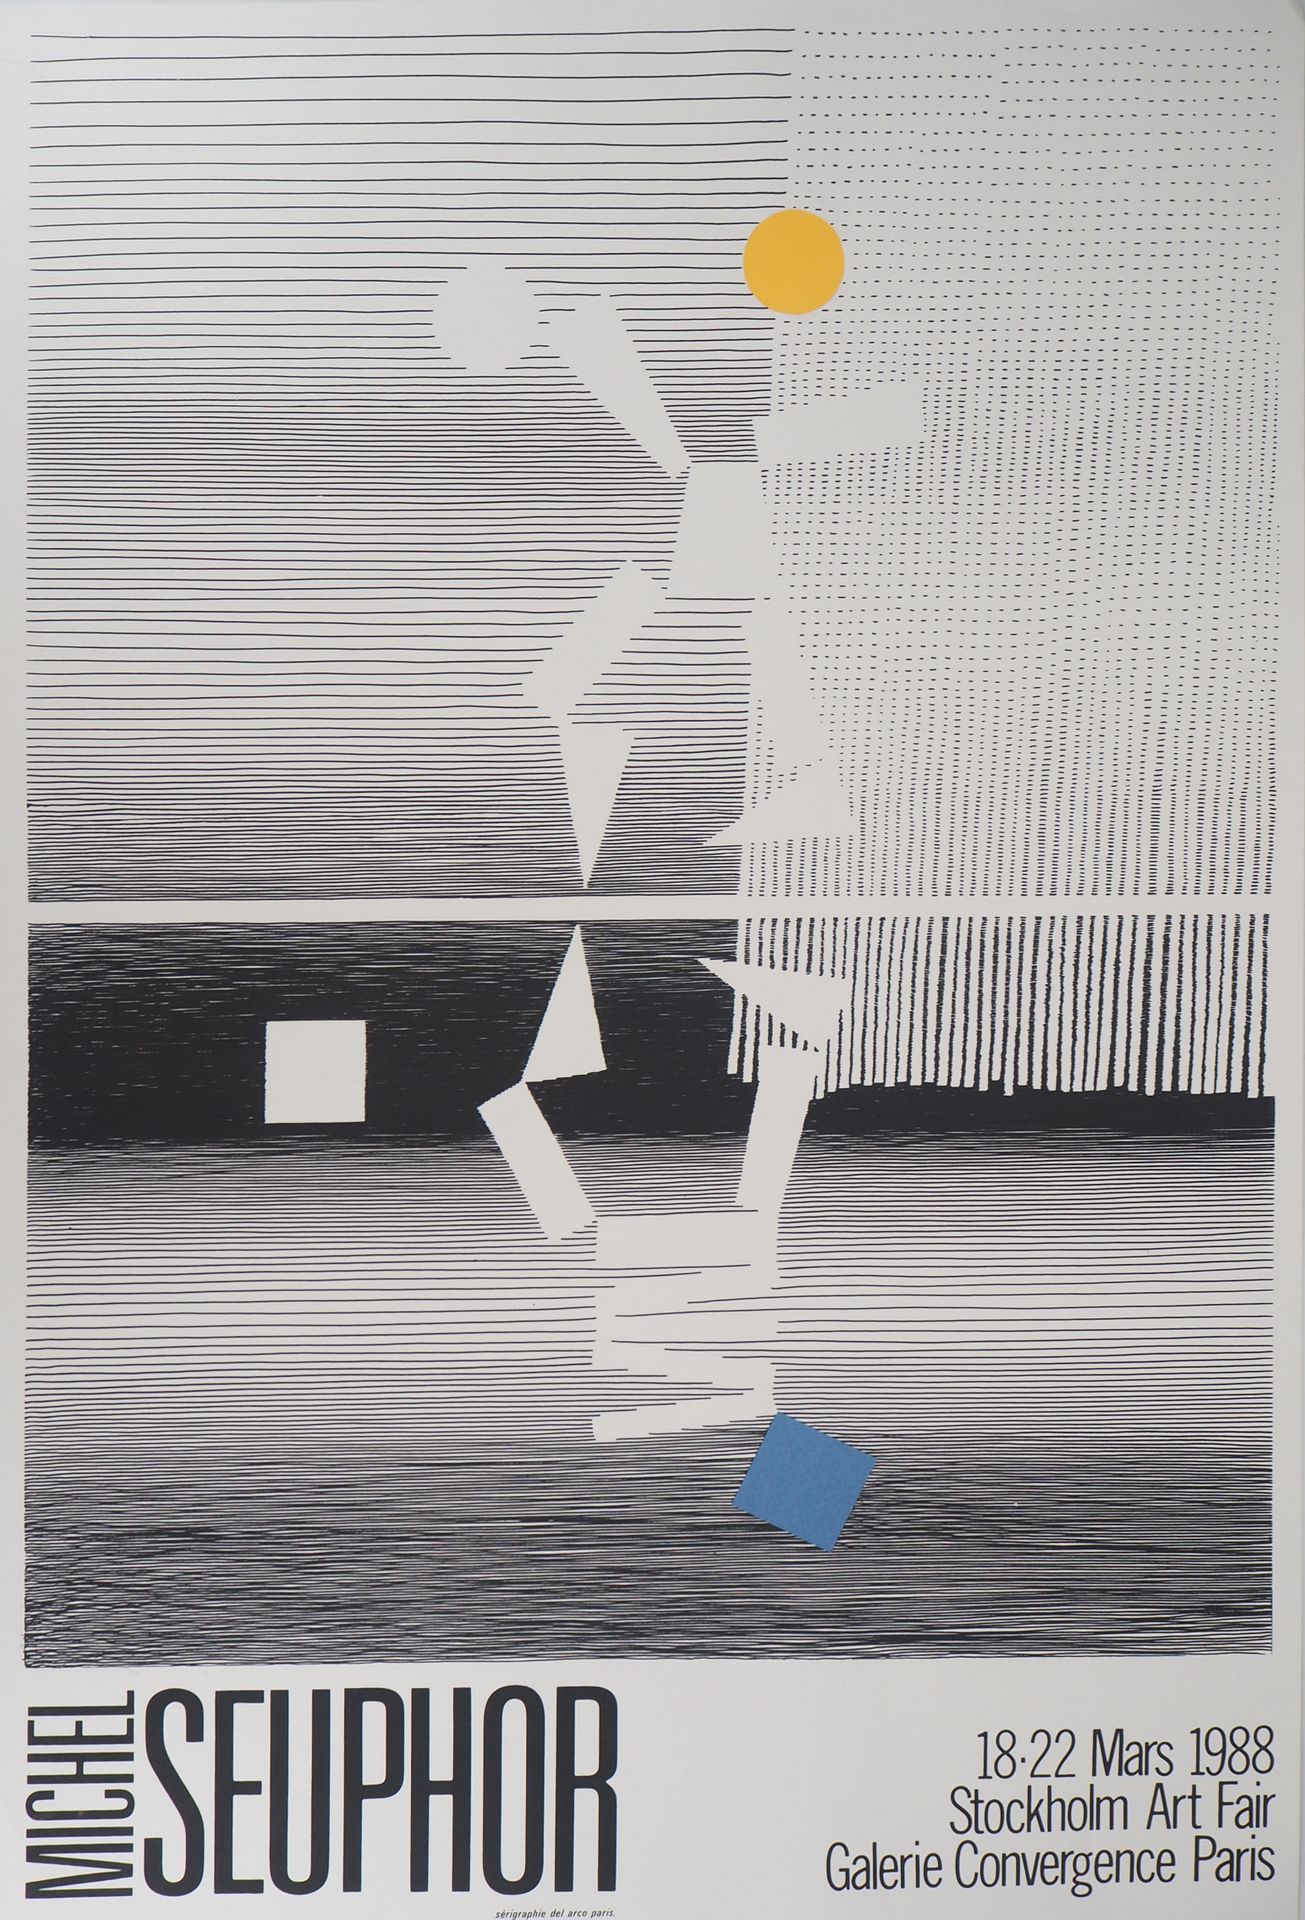 MICHEL SEUPHOR Michel SEUPHOR

1988年斯托克尔姆艺术博览会海报

原创的绢画

牛皮纸上79 x 53.5厘米

状况极佳

&hellip;